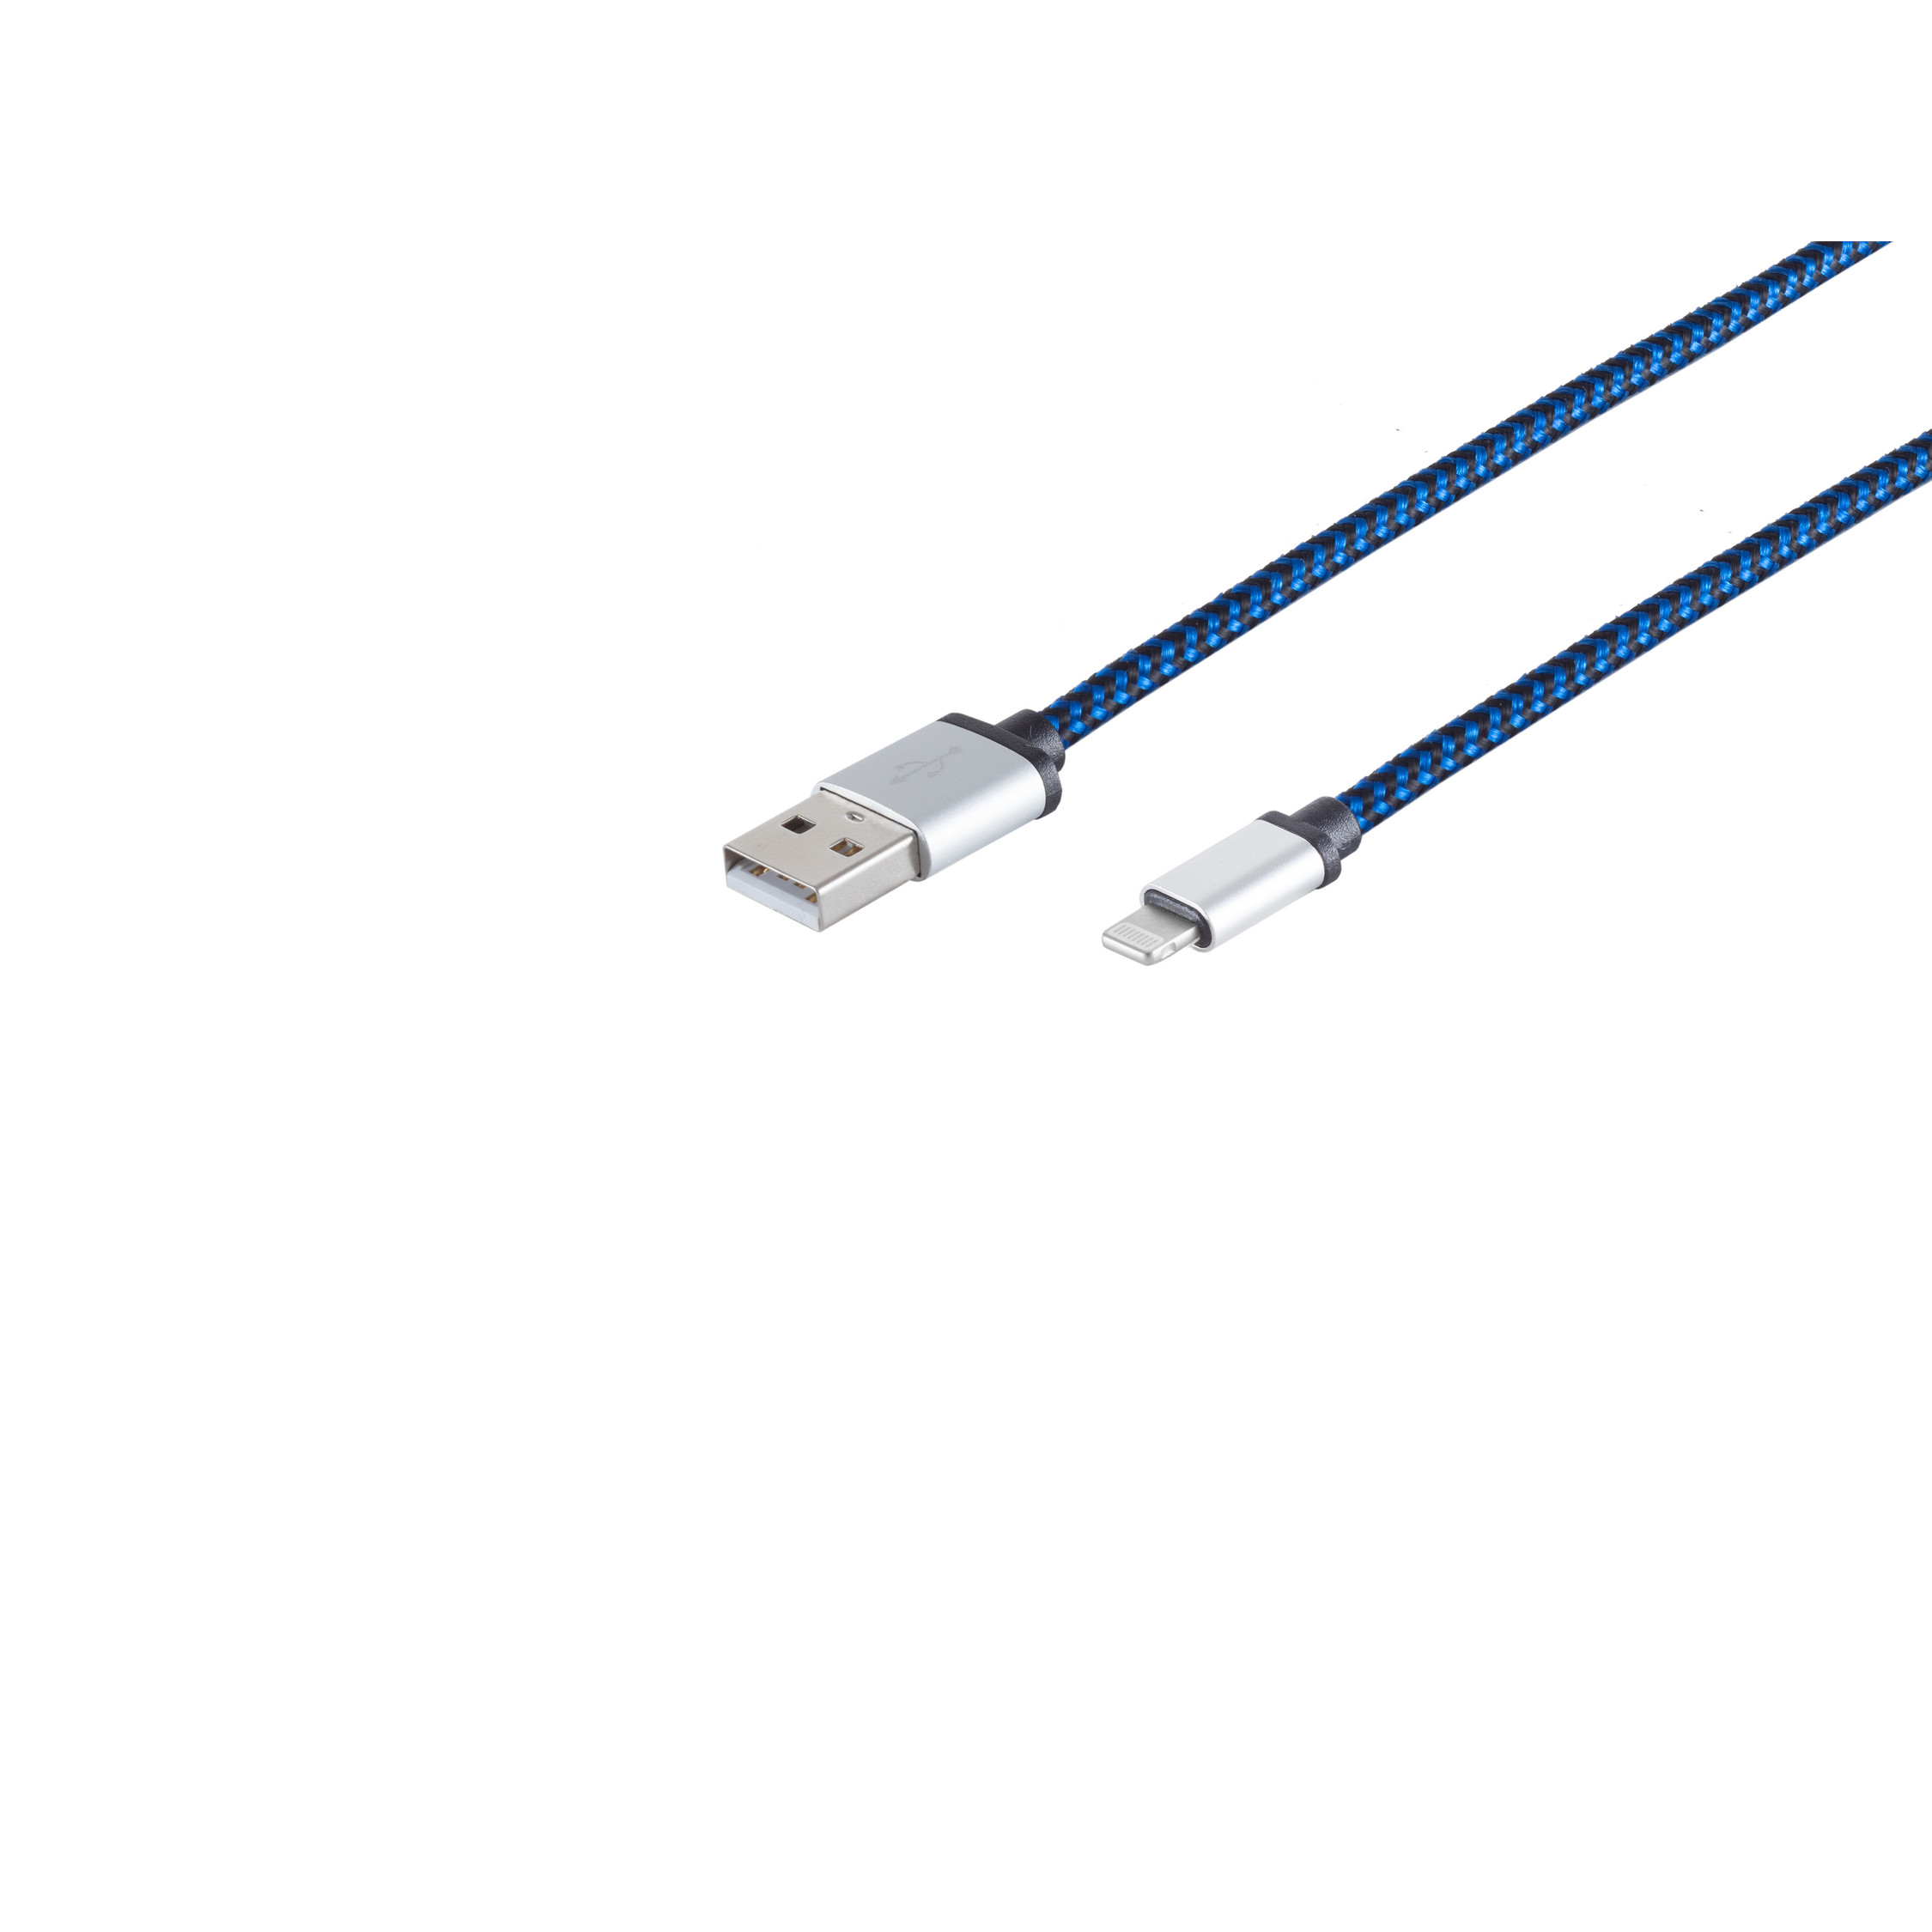 0,9m USB-Ladekabel USB CONNECTIVITY 8-pin S/CONN A Kabel Stecker MAXIMUM Stecker auf